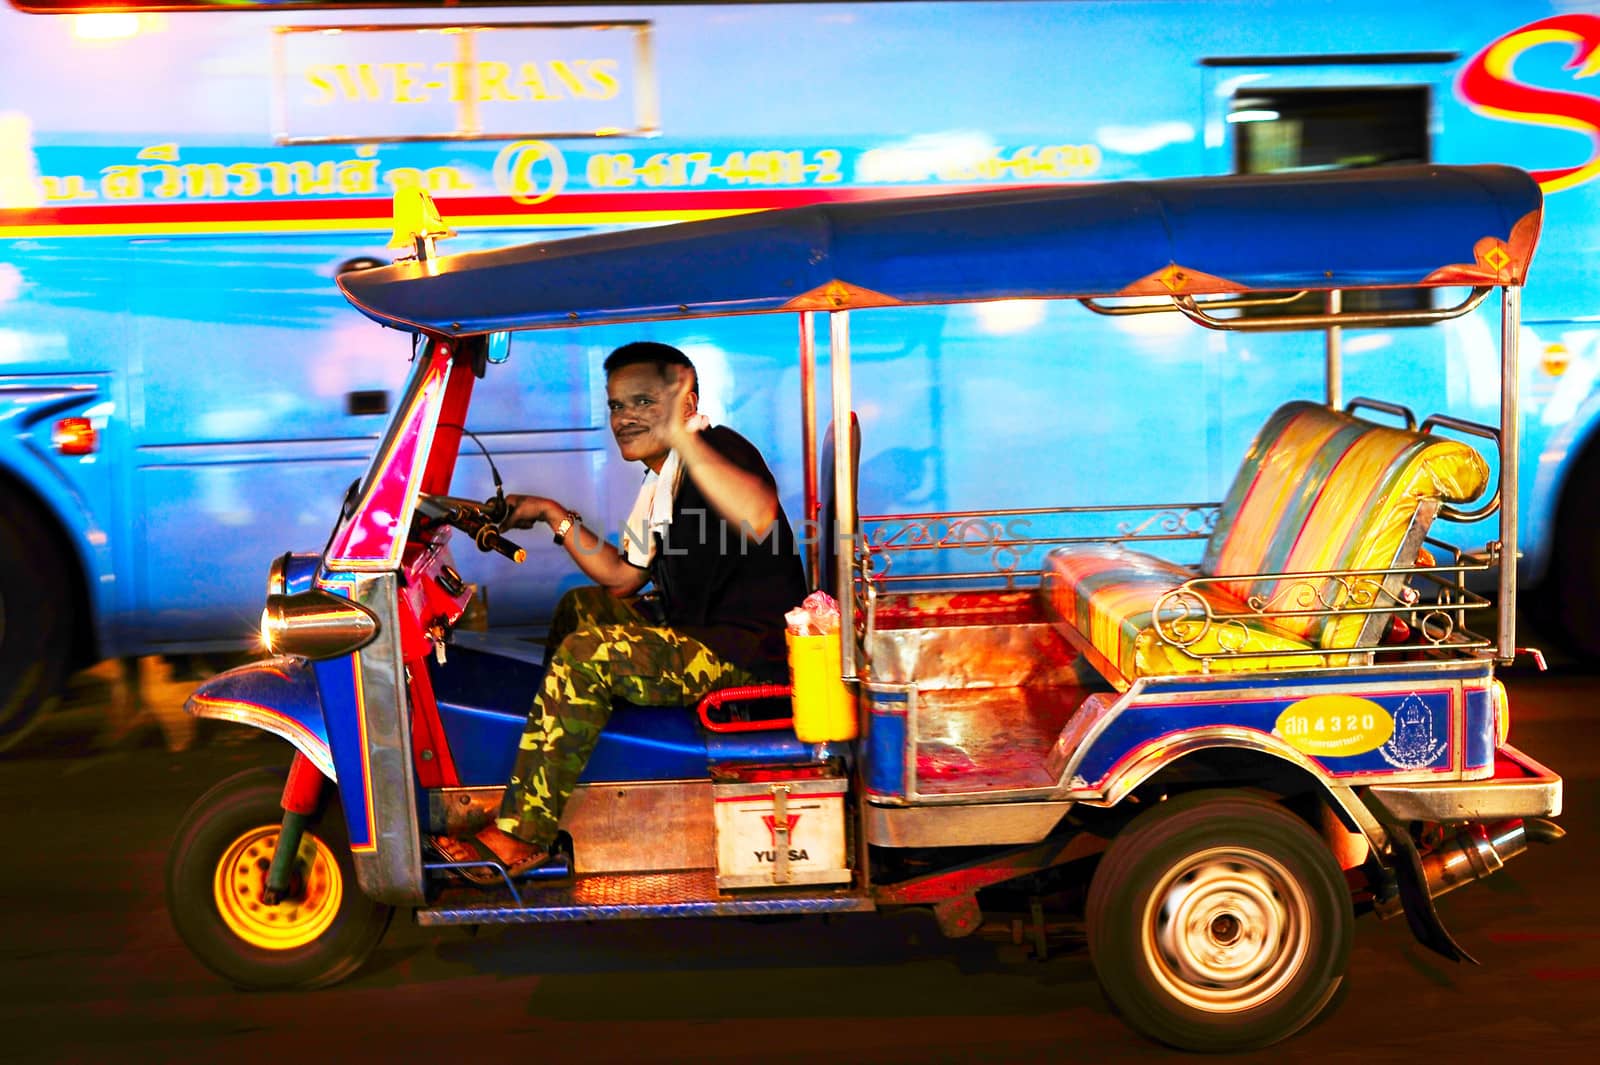 Bangkok taxi by joyfull